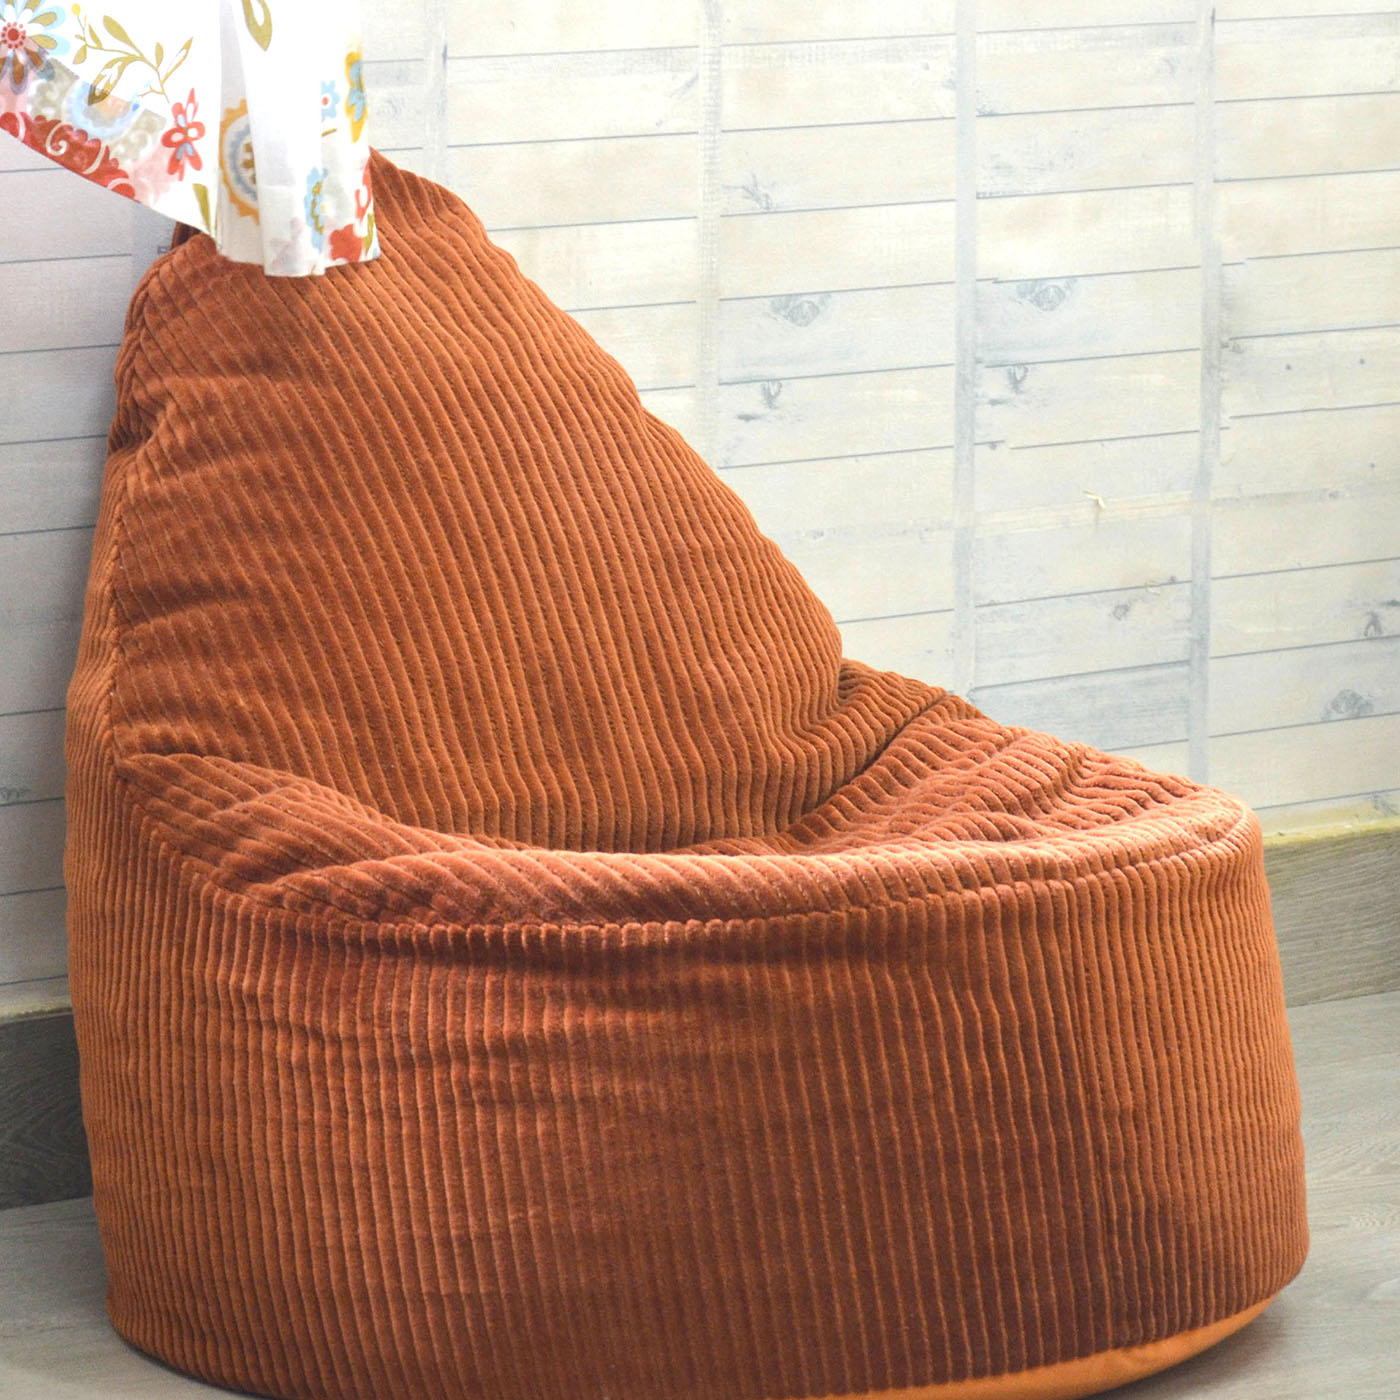 RestnSleep Couch Lounge Chair Dark Purple Luxury Bean Bag with Footrest   Rest n Sleep Bean Bags